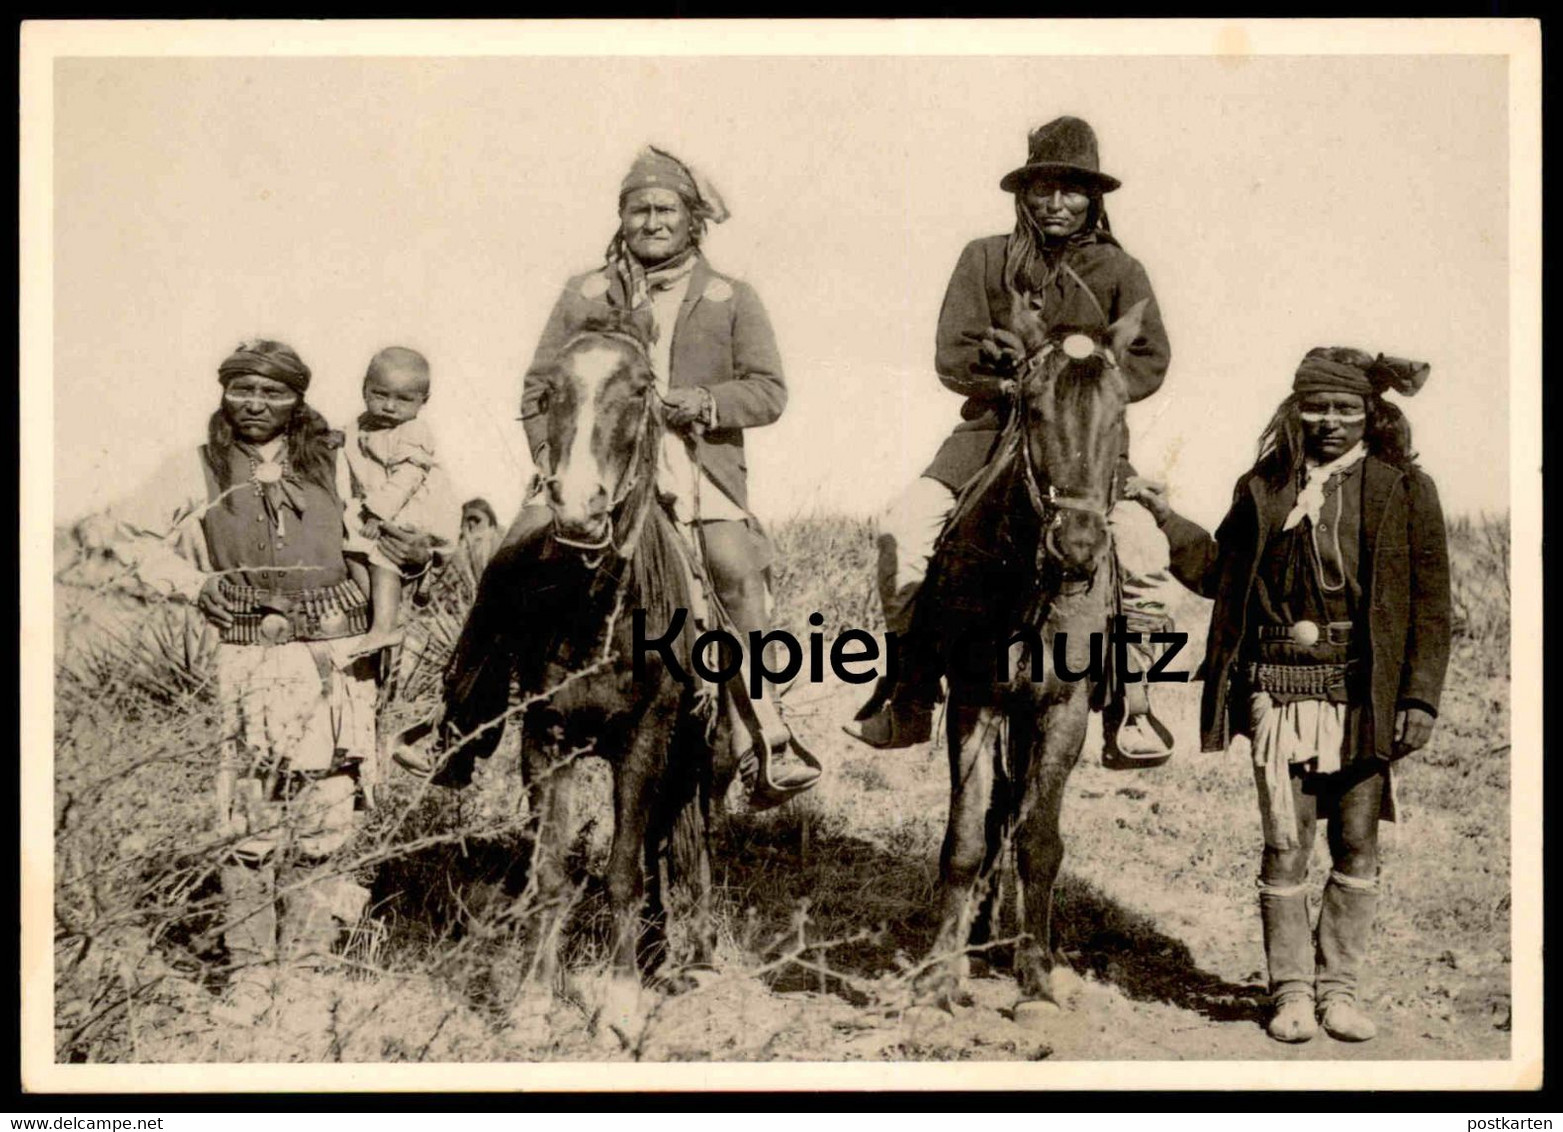 ÄLTERE POSTKARTE INDIANER GERONIMO AND NACHEZ CHIRACAHUA APACHE CHIEFS INDIAN INDIO Apachen Postcard Cpa Ansichtskarte - Amerika